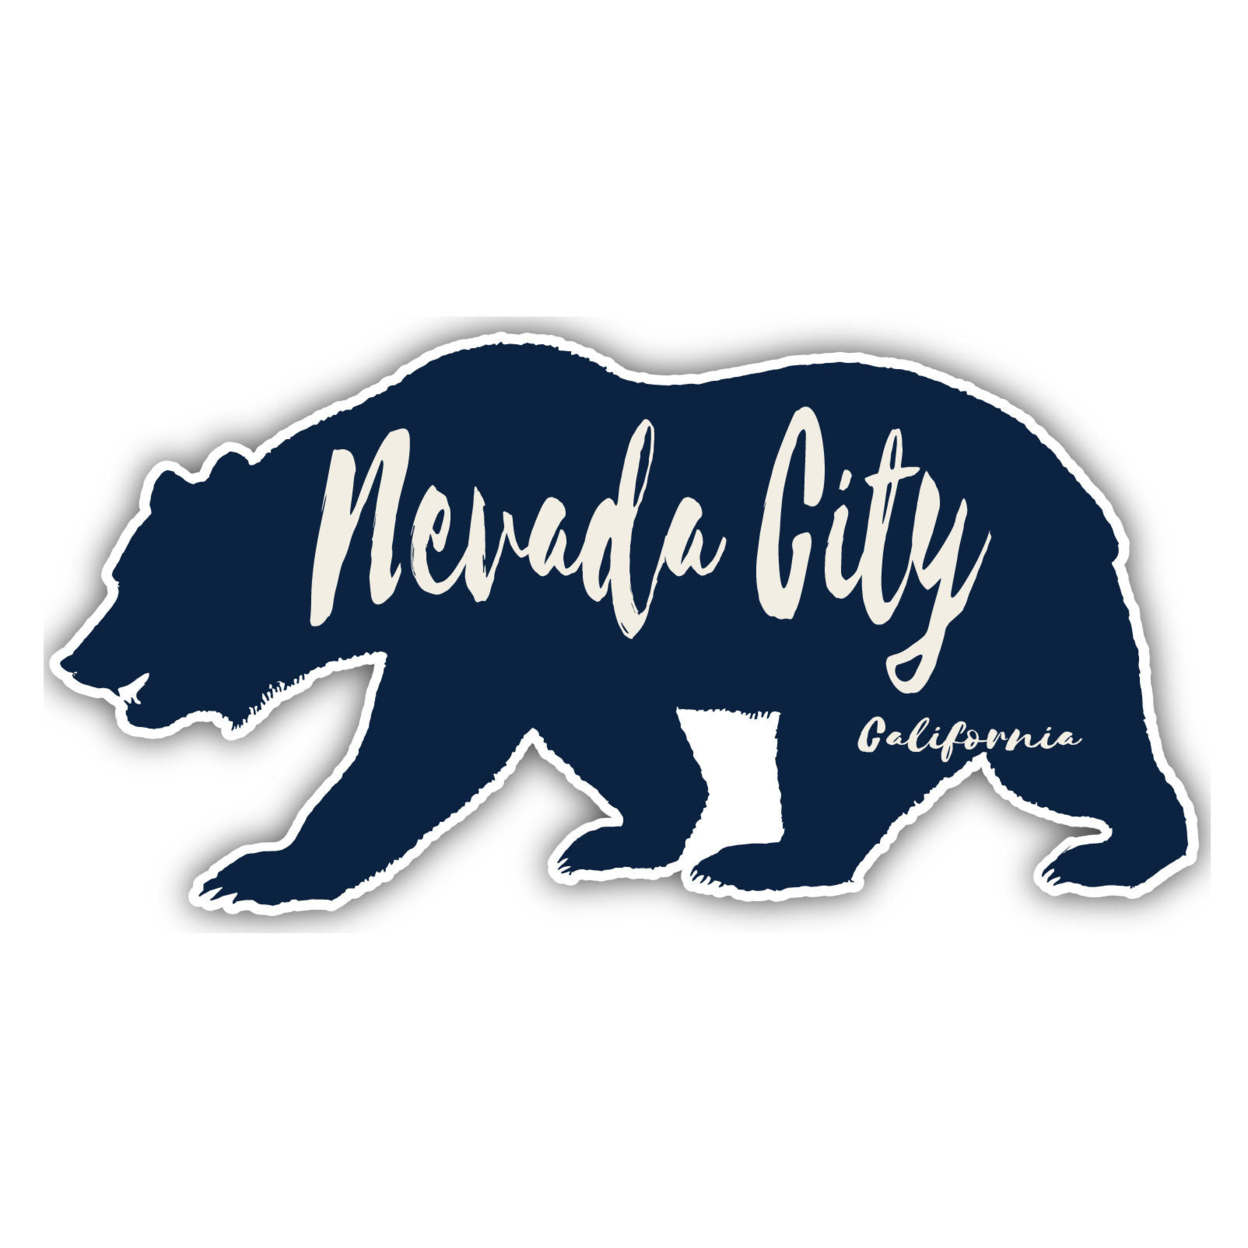 Nevada City California Souvenir Decorative Stickers (Choose Theme And Size) - Single Unit, 4-Inch, Camp Life